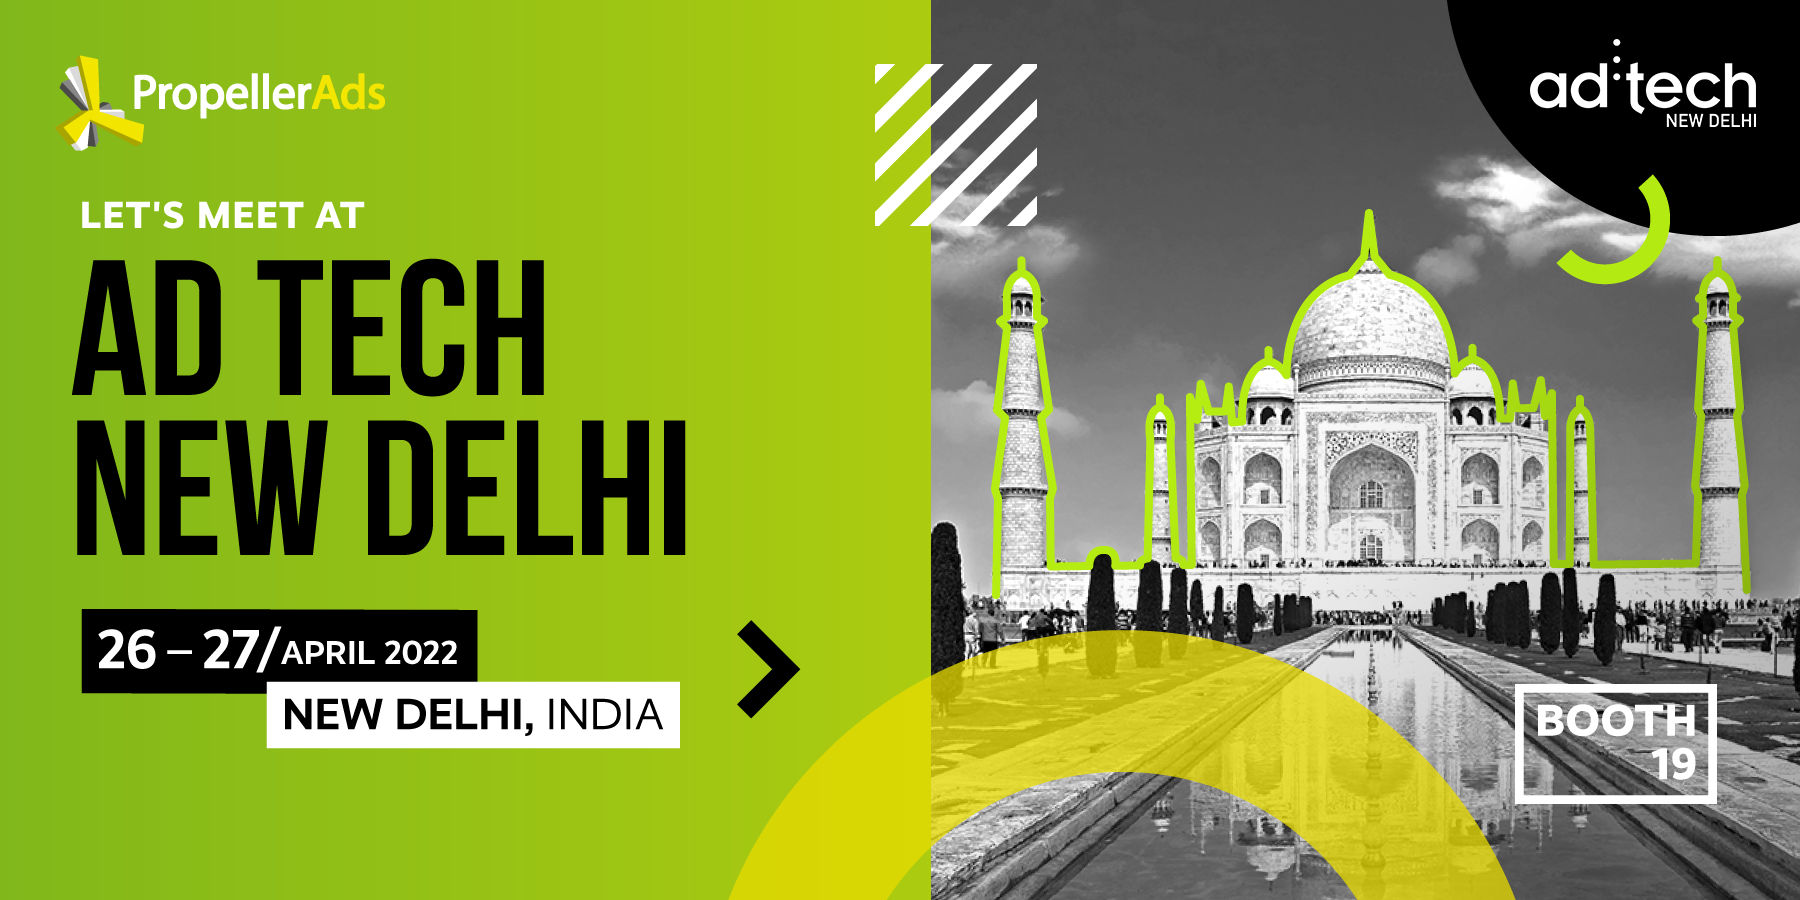 AdTech22, New Delhi